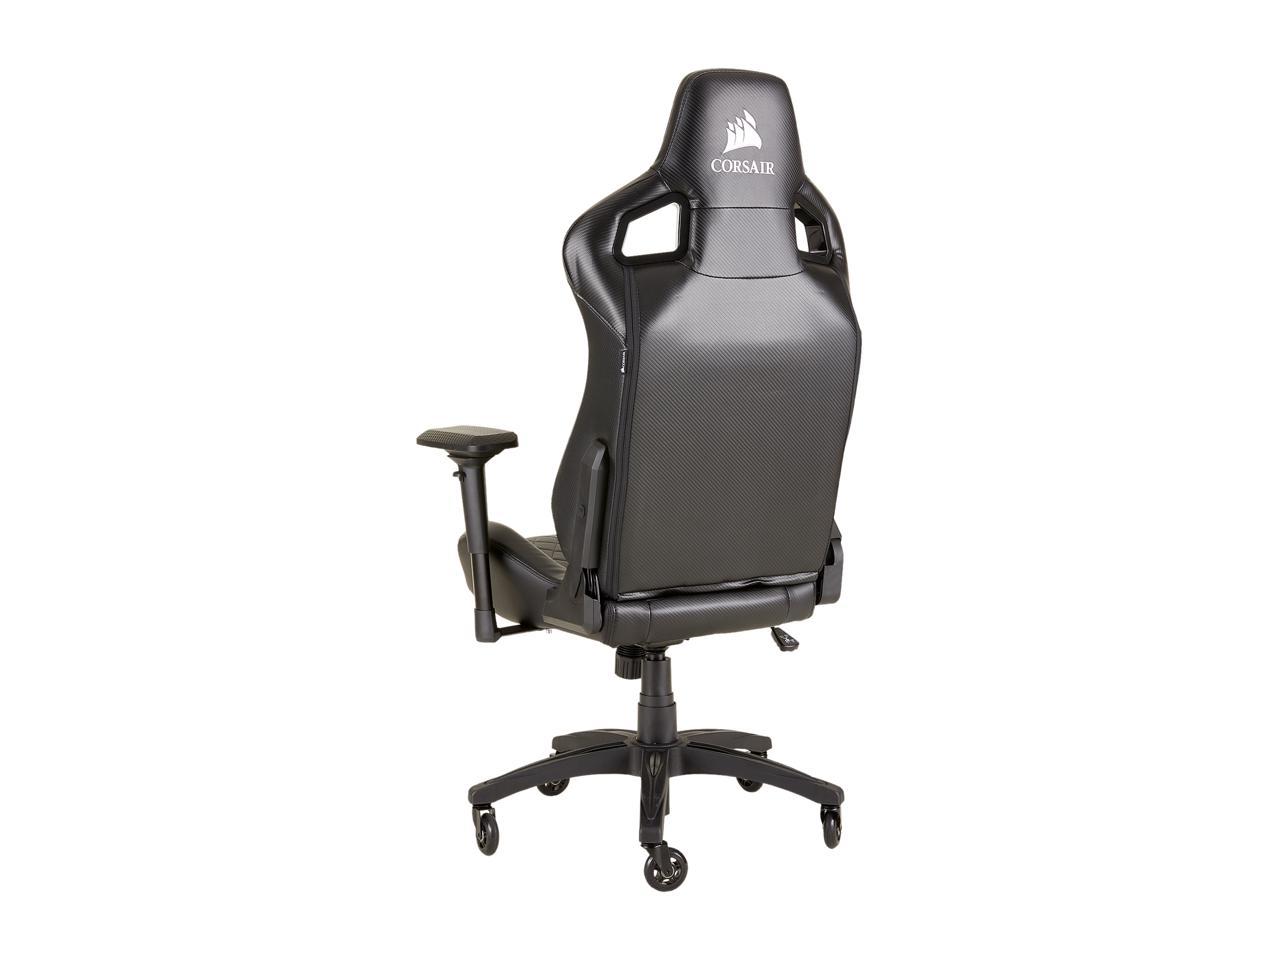  CORSAIR  T1  RACE  Gaming  Chair  Black Newegg ca